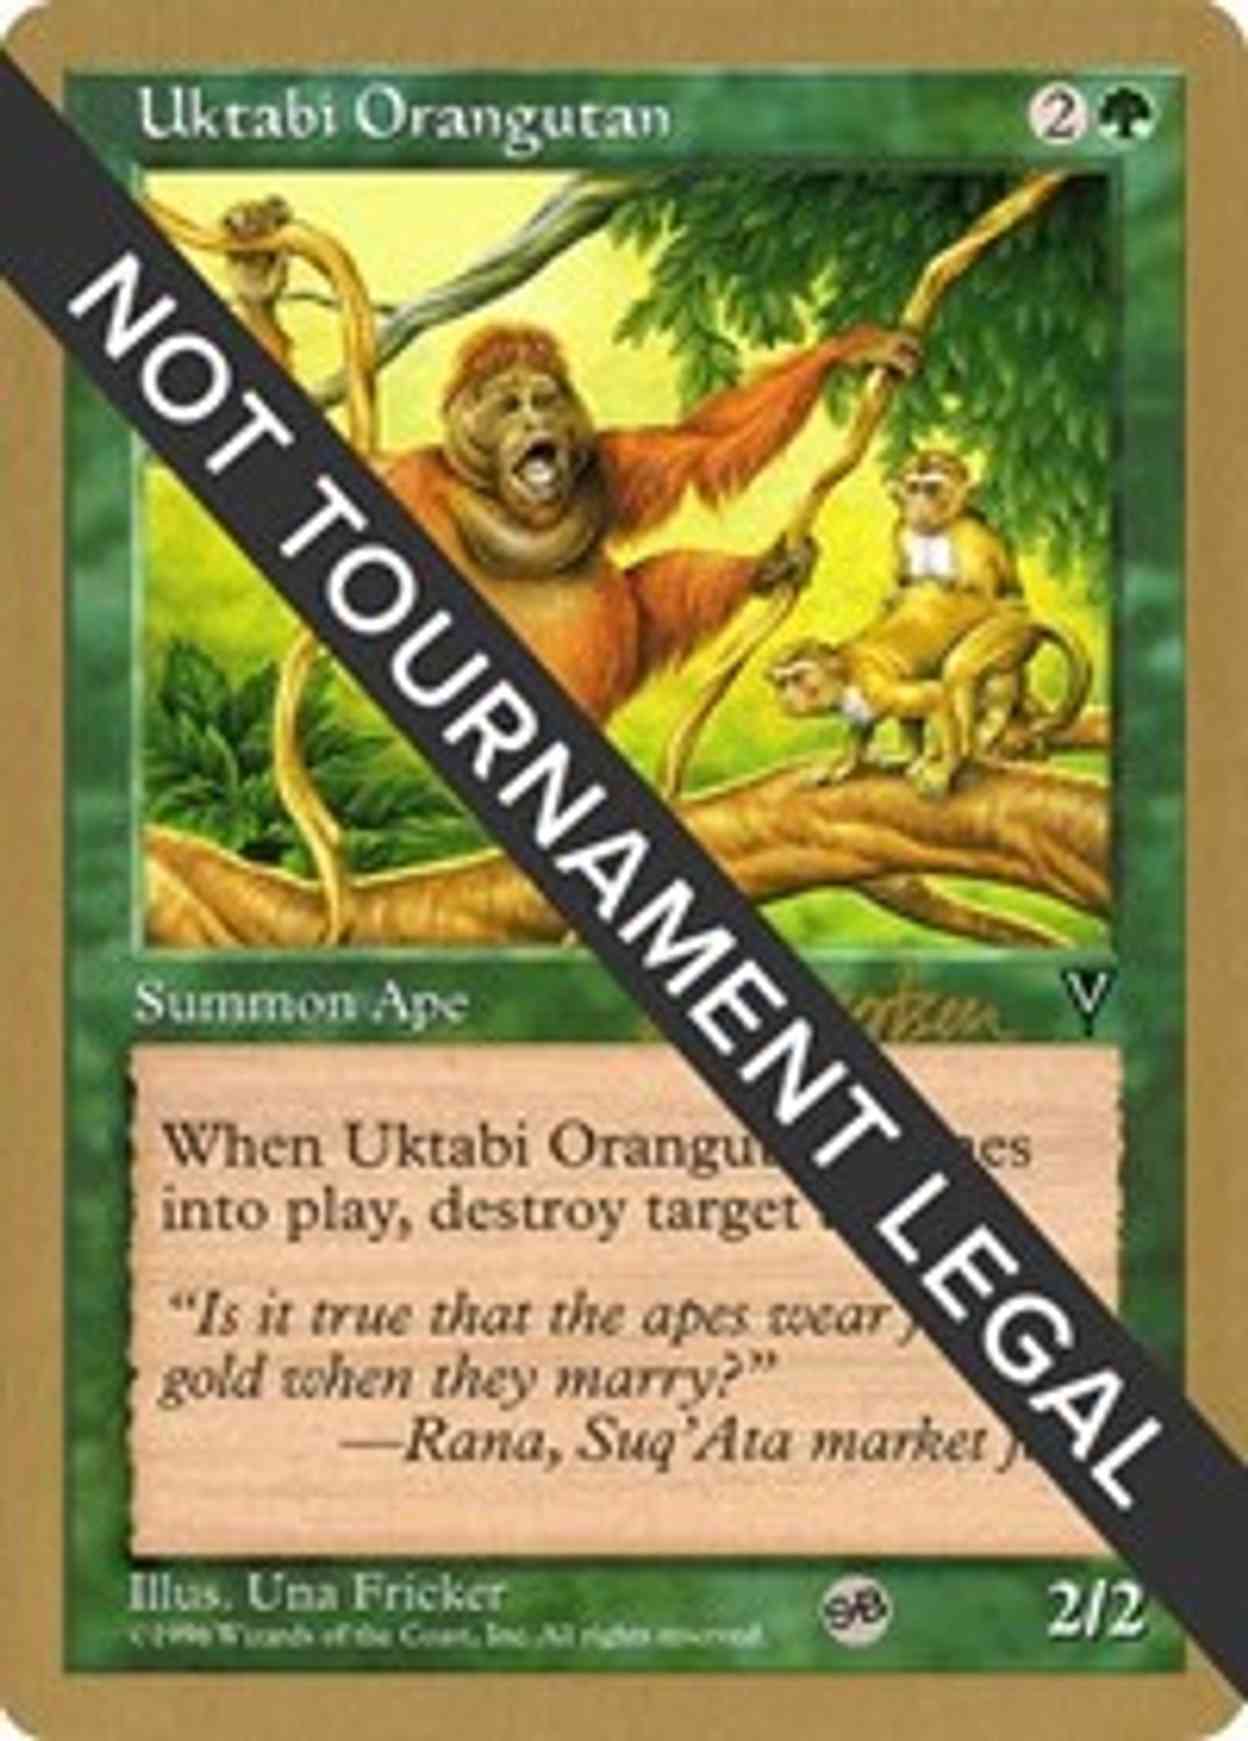 Uktabi Orangutan - 1997 Svend Geertsen (VIS) (SB) magic card front